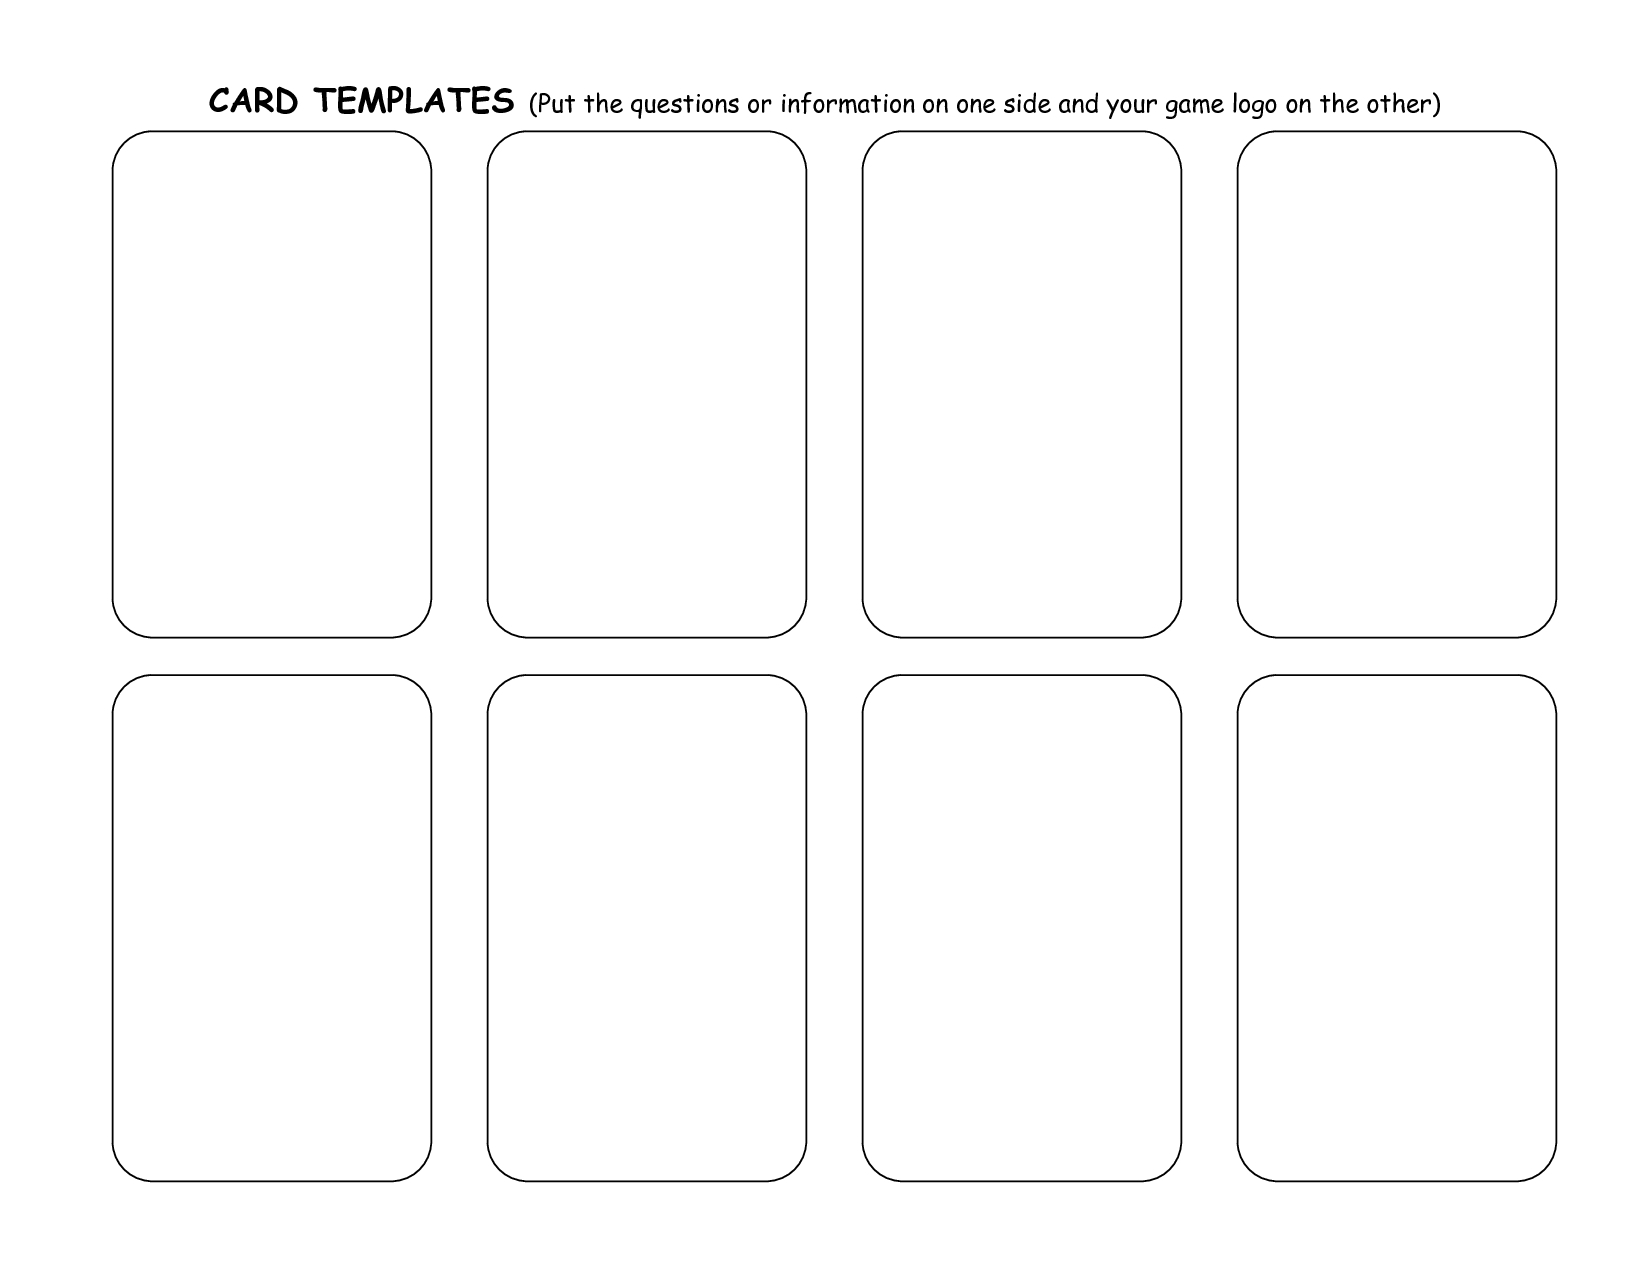 Playing Card Templatenokiaaplicaciones.| nokiaaplicaciones.com